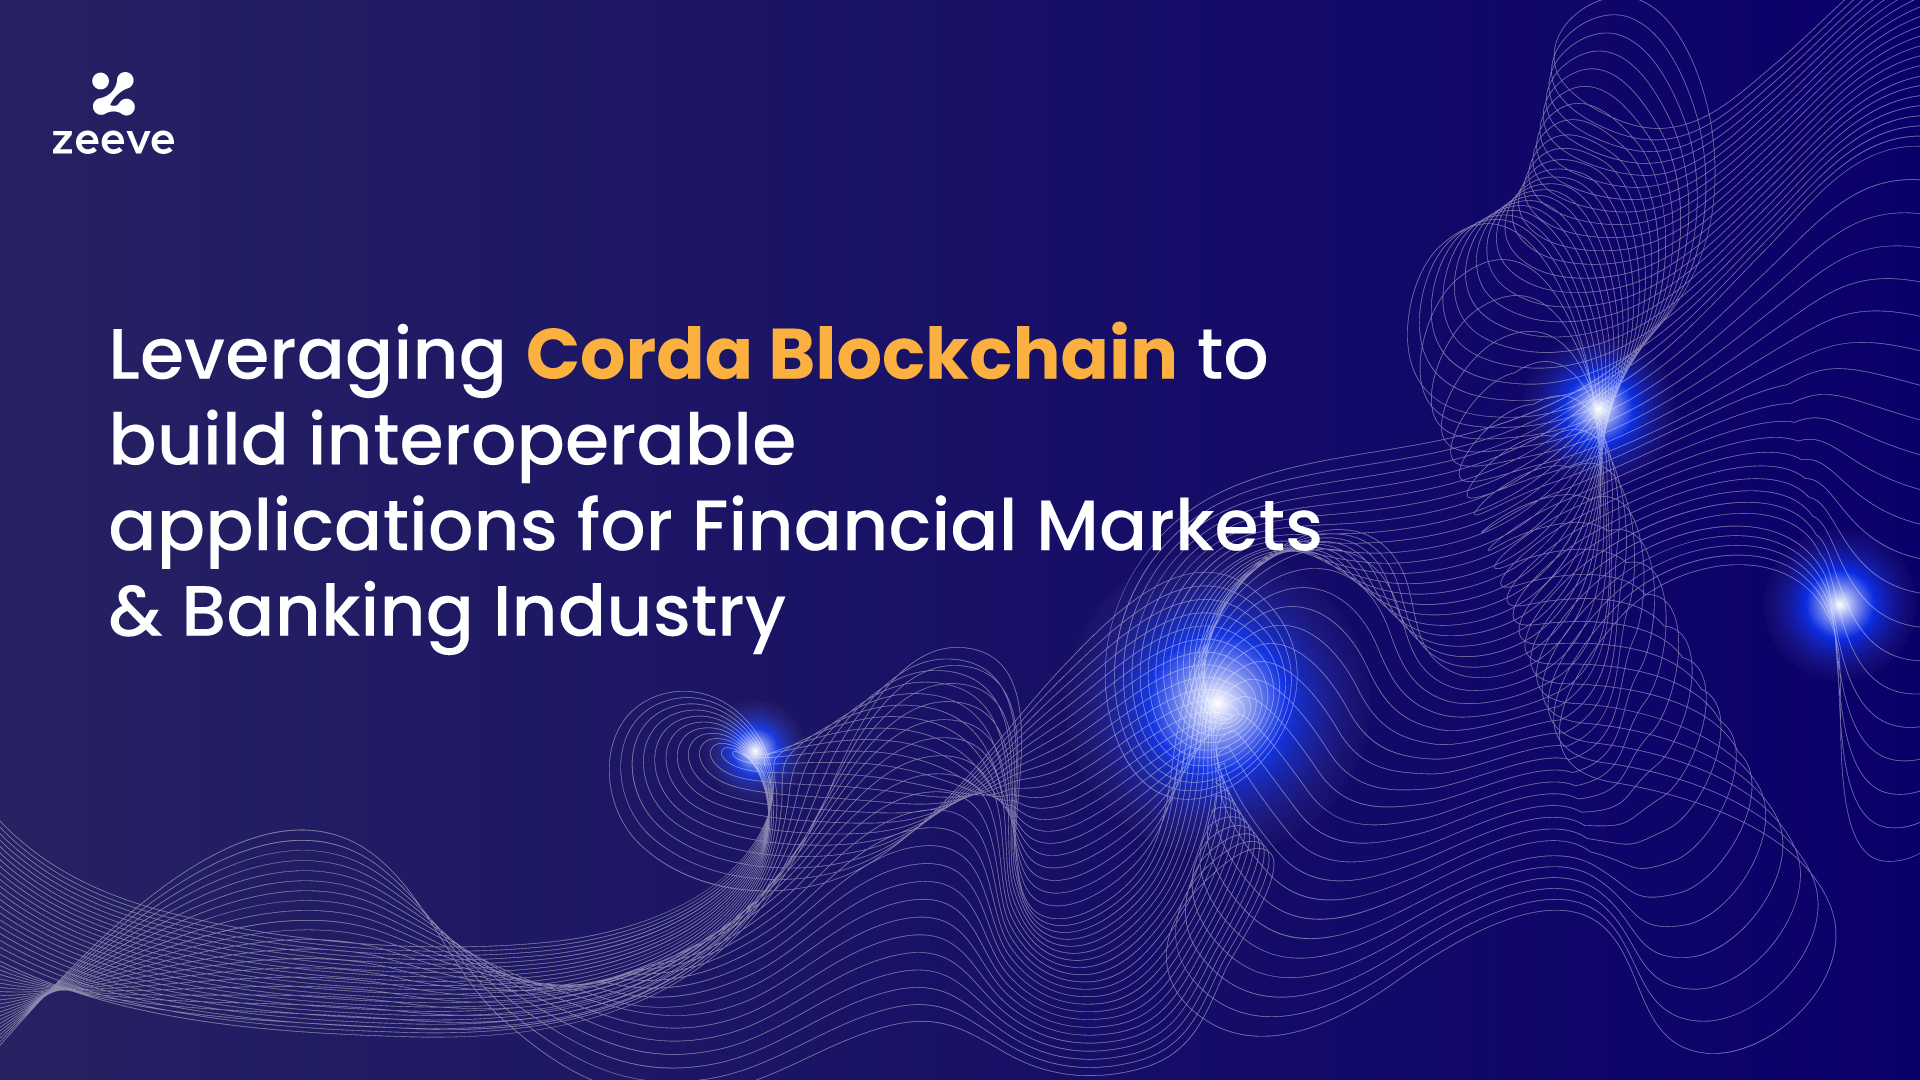 Corda blockchain for Banking Industry